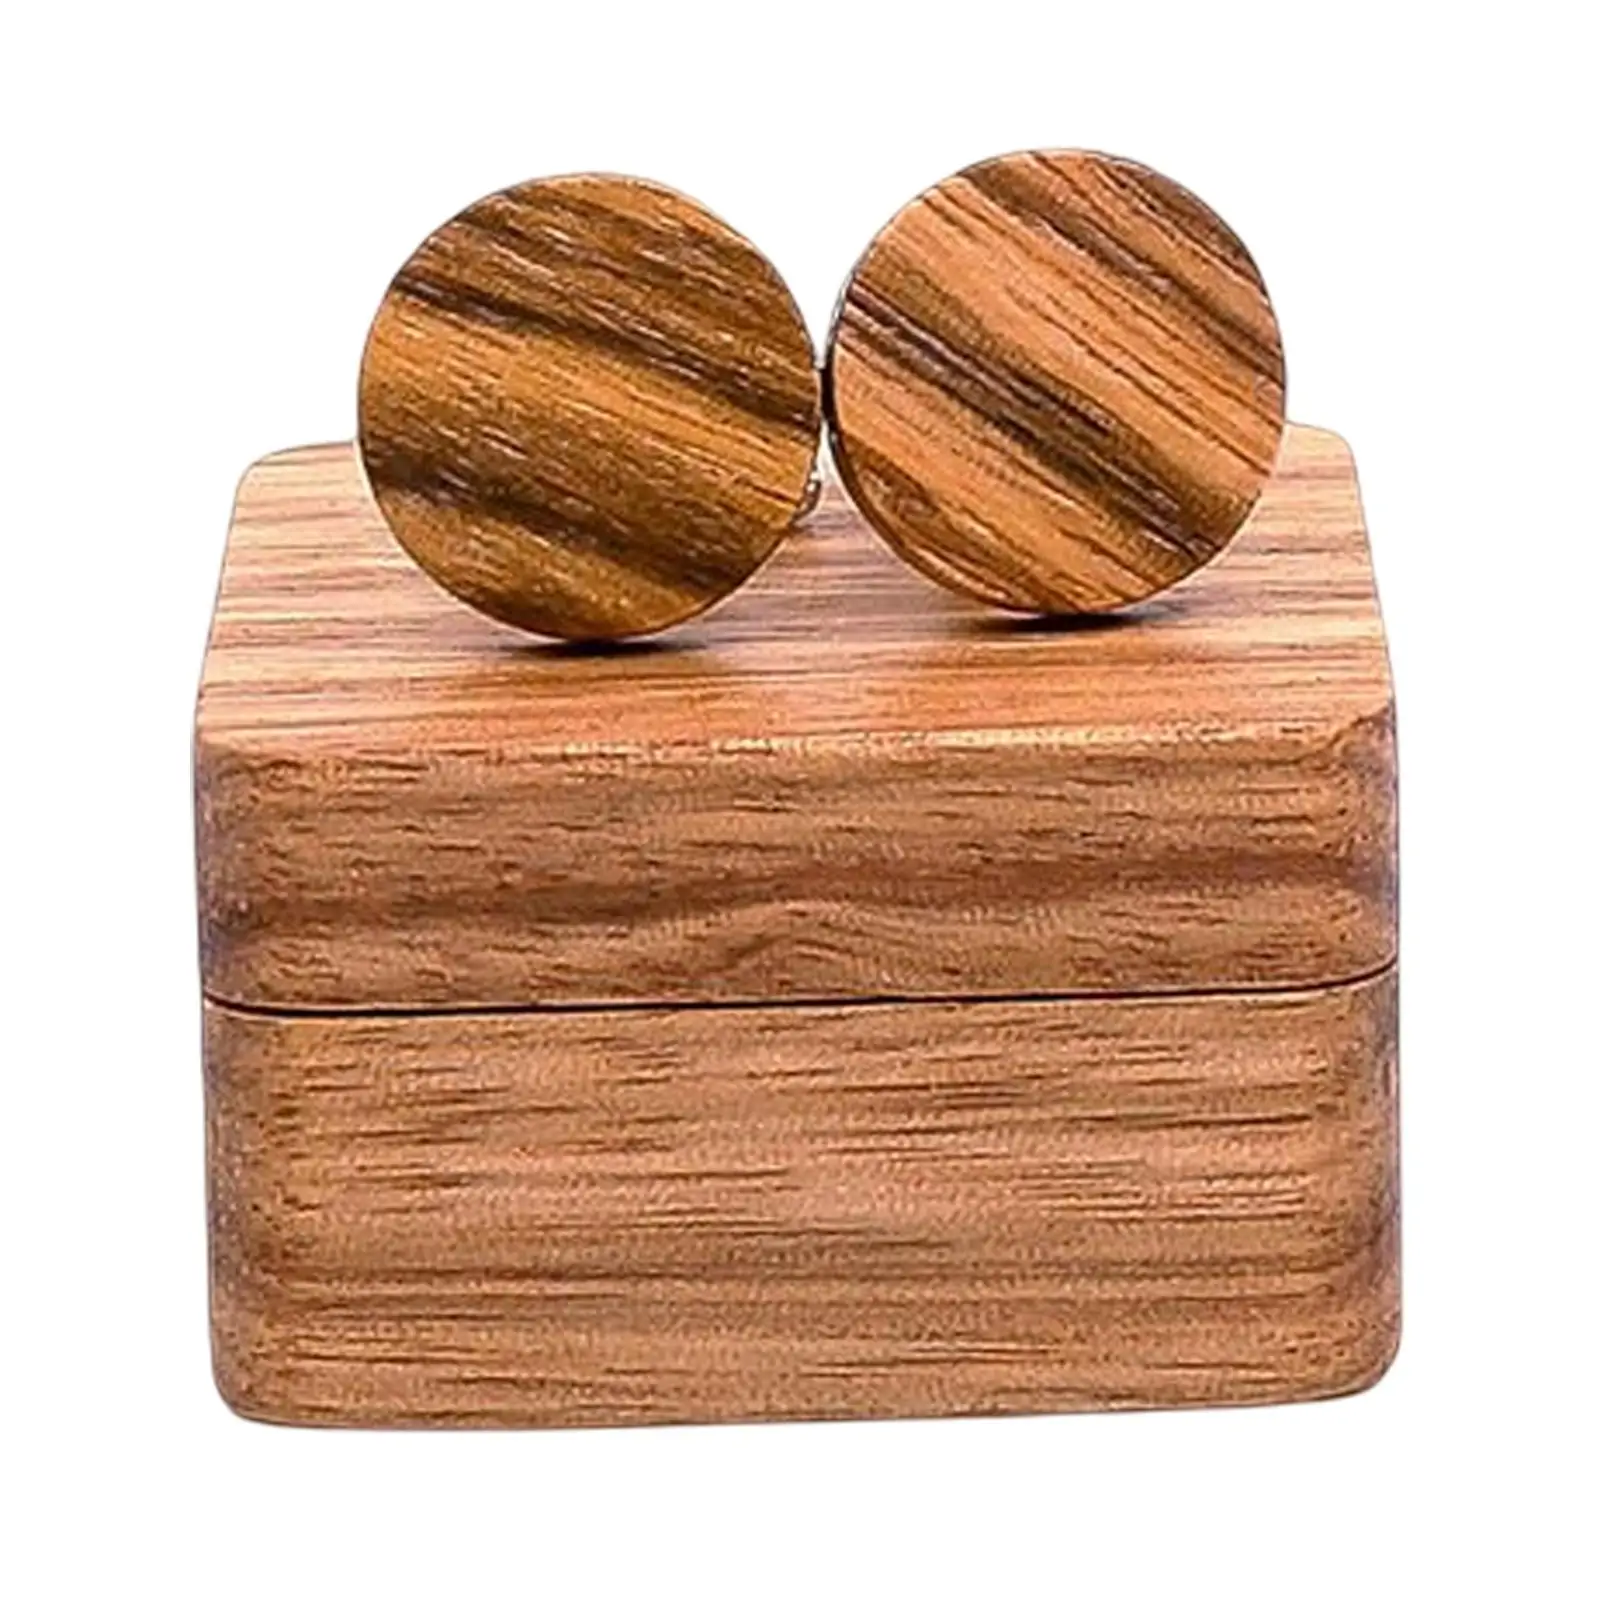 Rustic Cufflinks +Wood Gift Box Handsome Cuff Links for Birthday Wedding Anniversary Husband Gifts